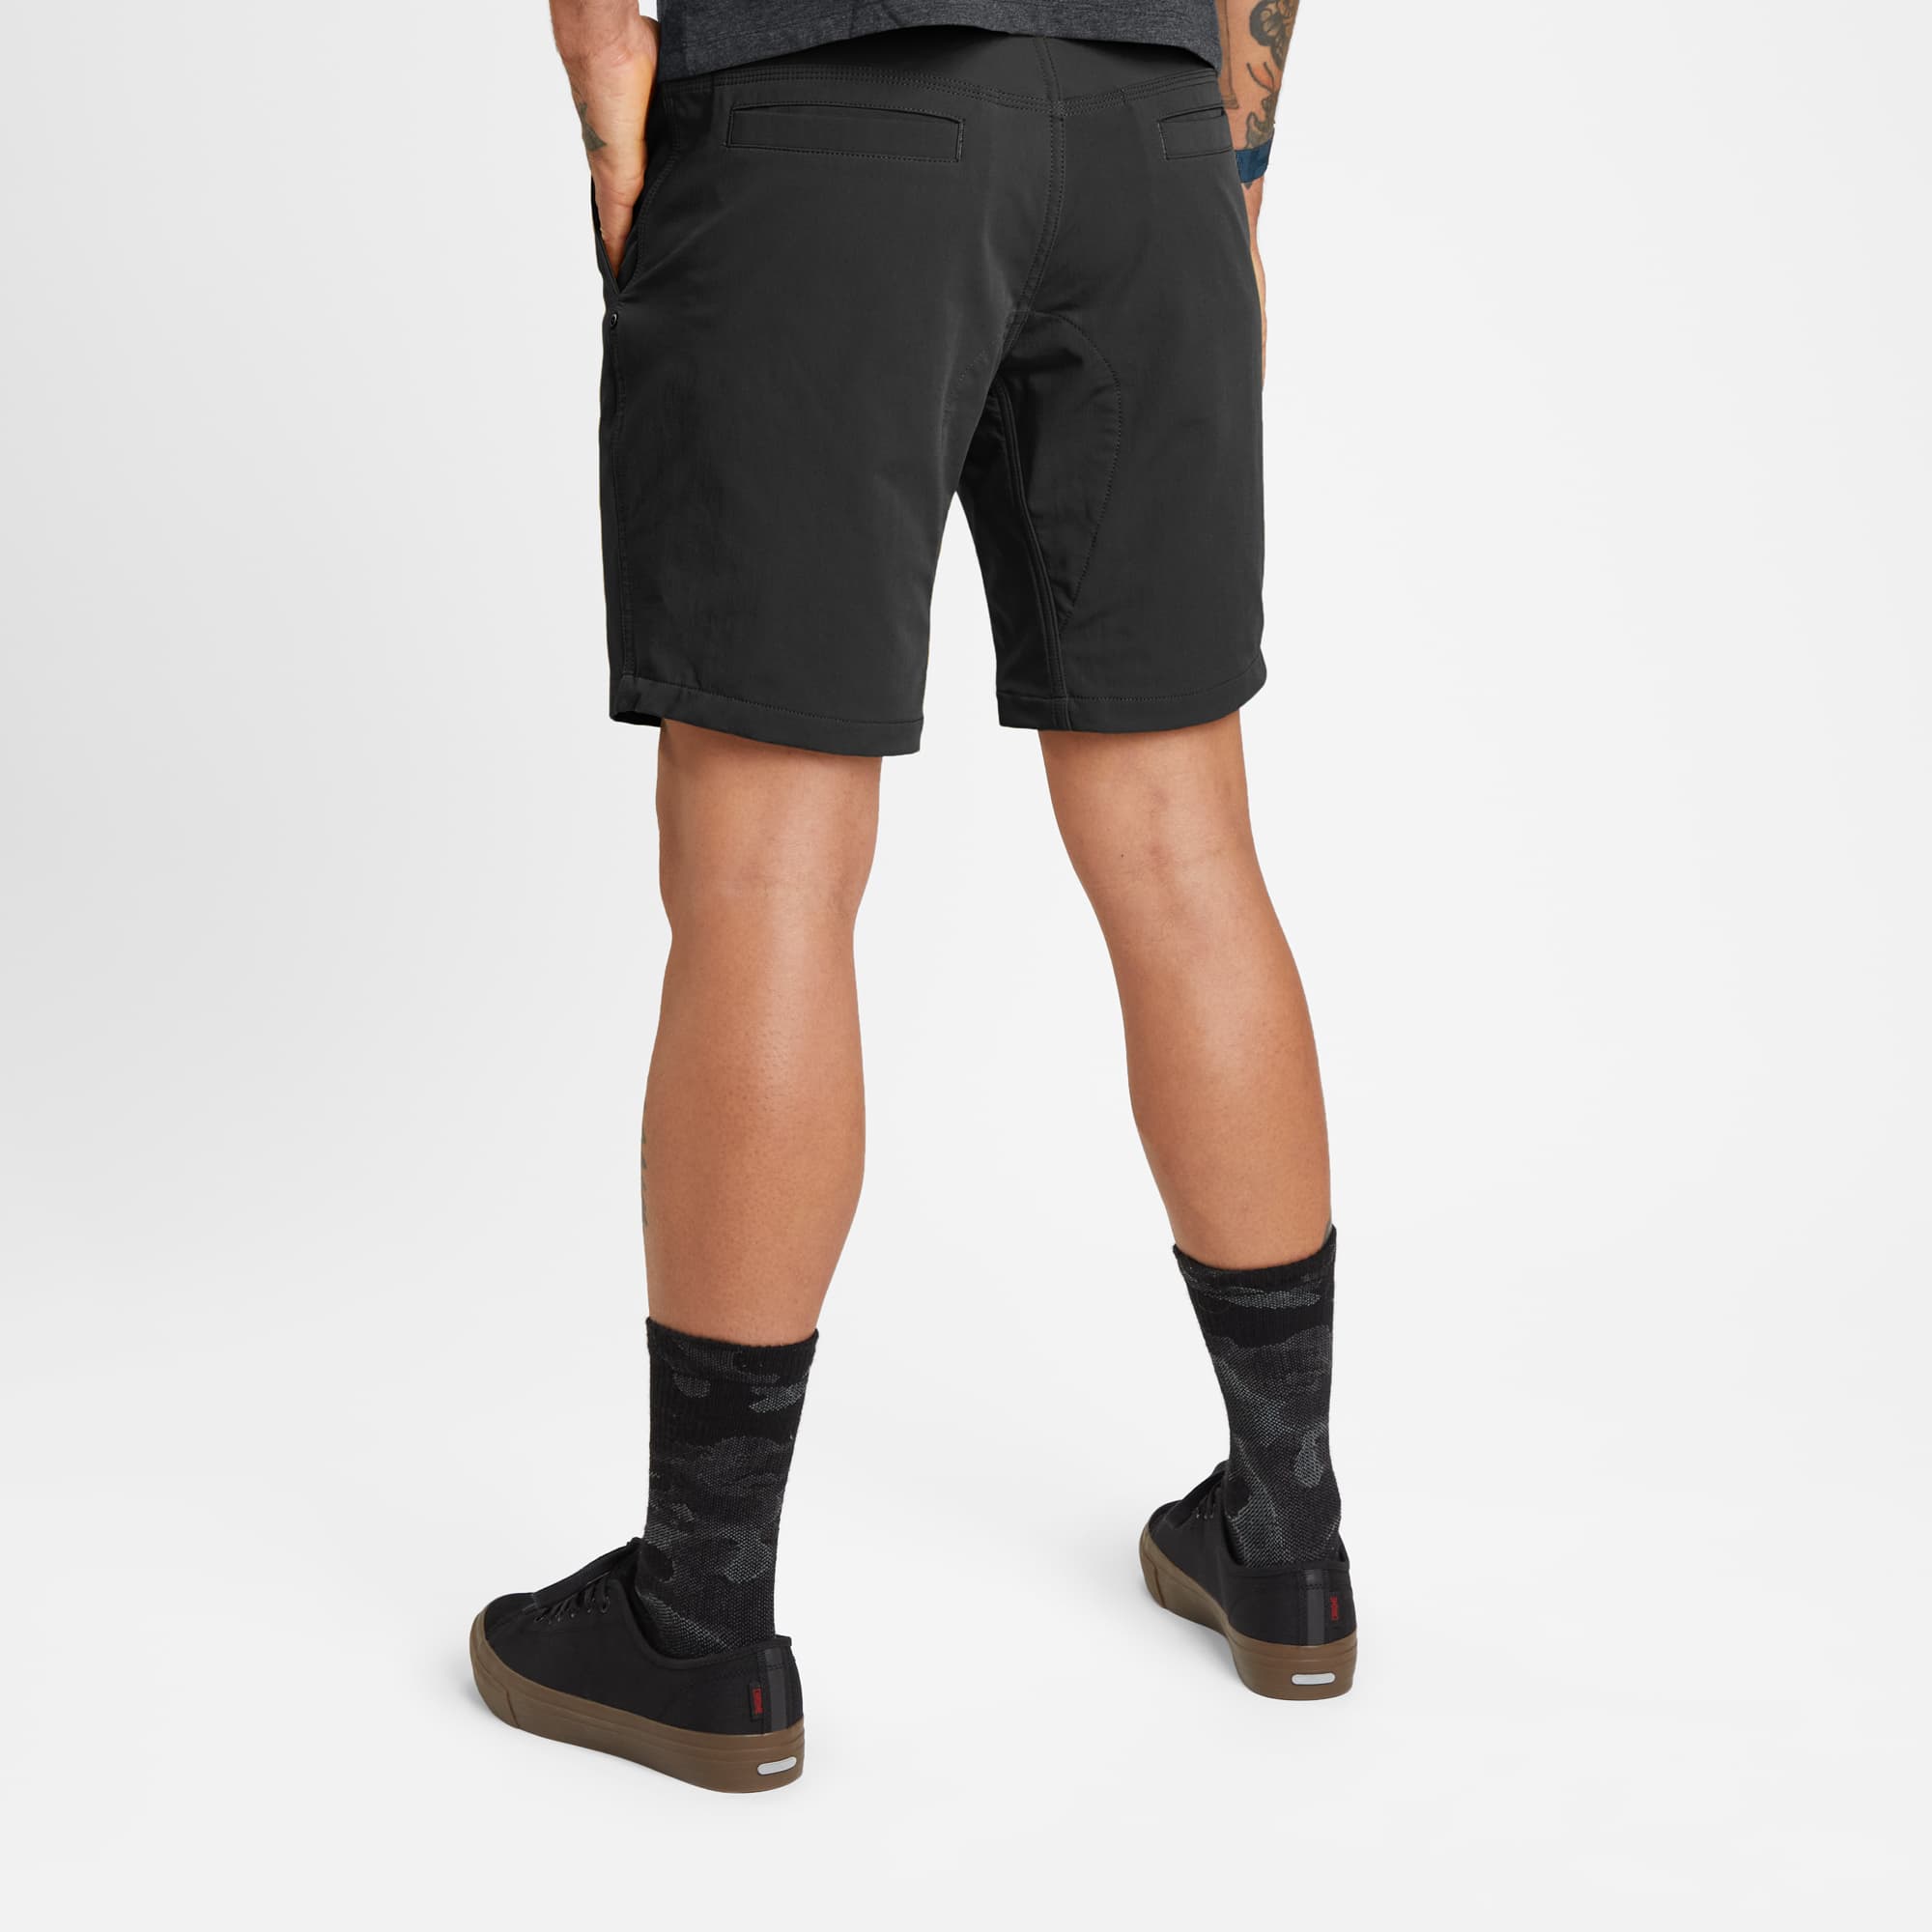 Men's 9" inseam Folsom Mid Short in black worn by a man back view #color_black